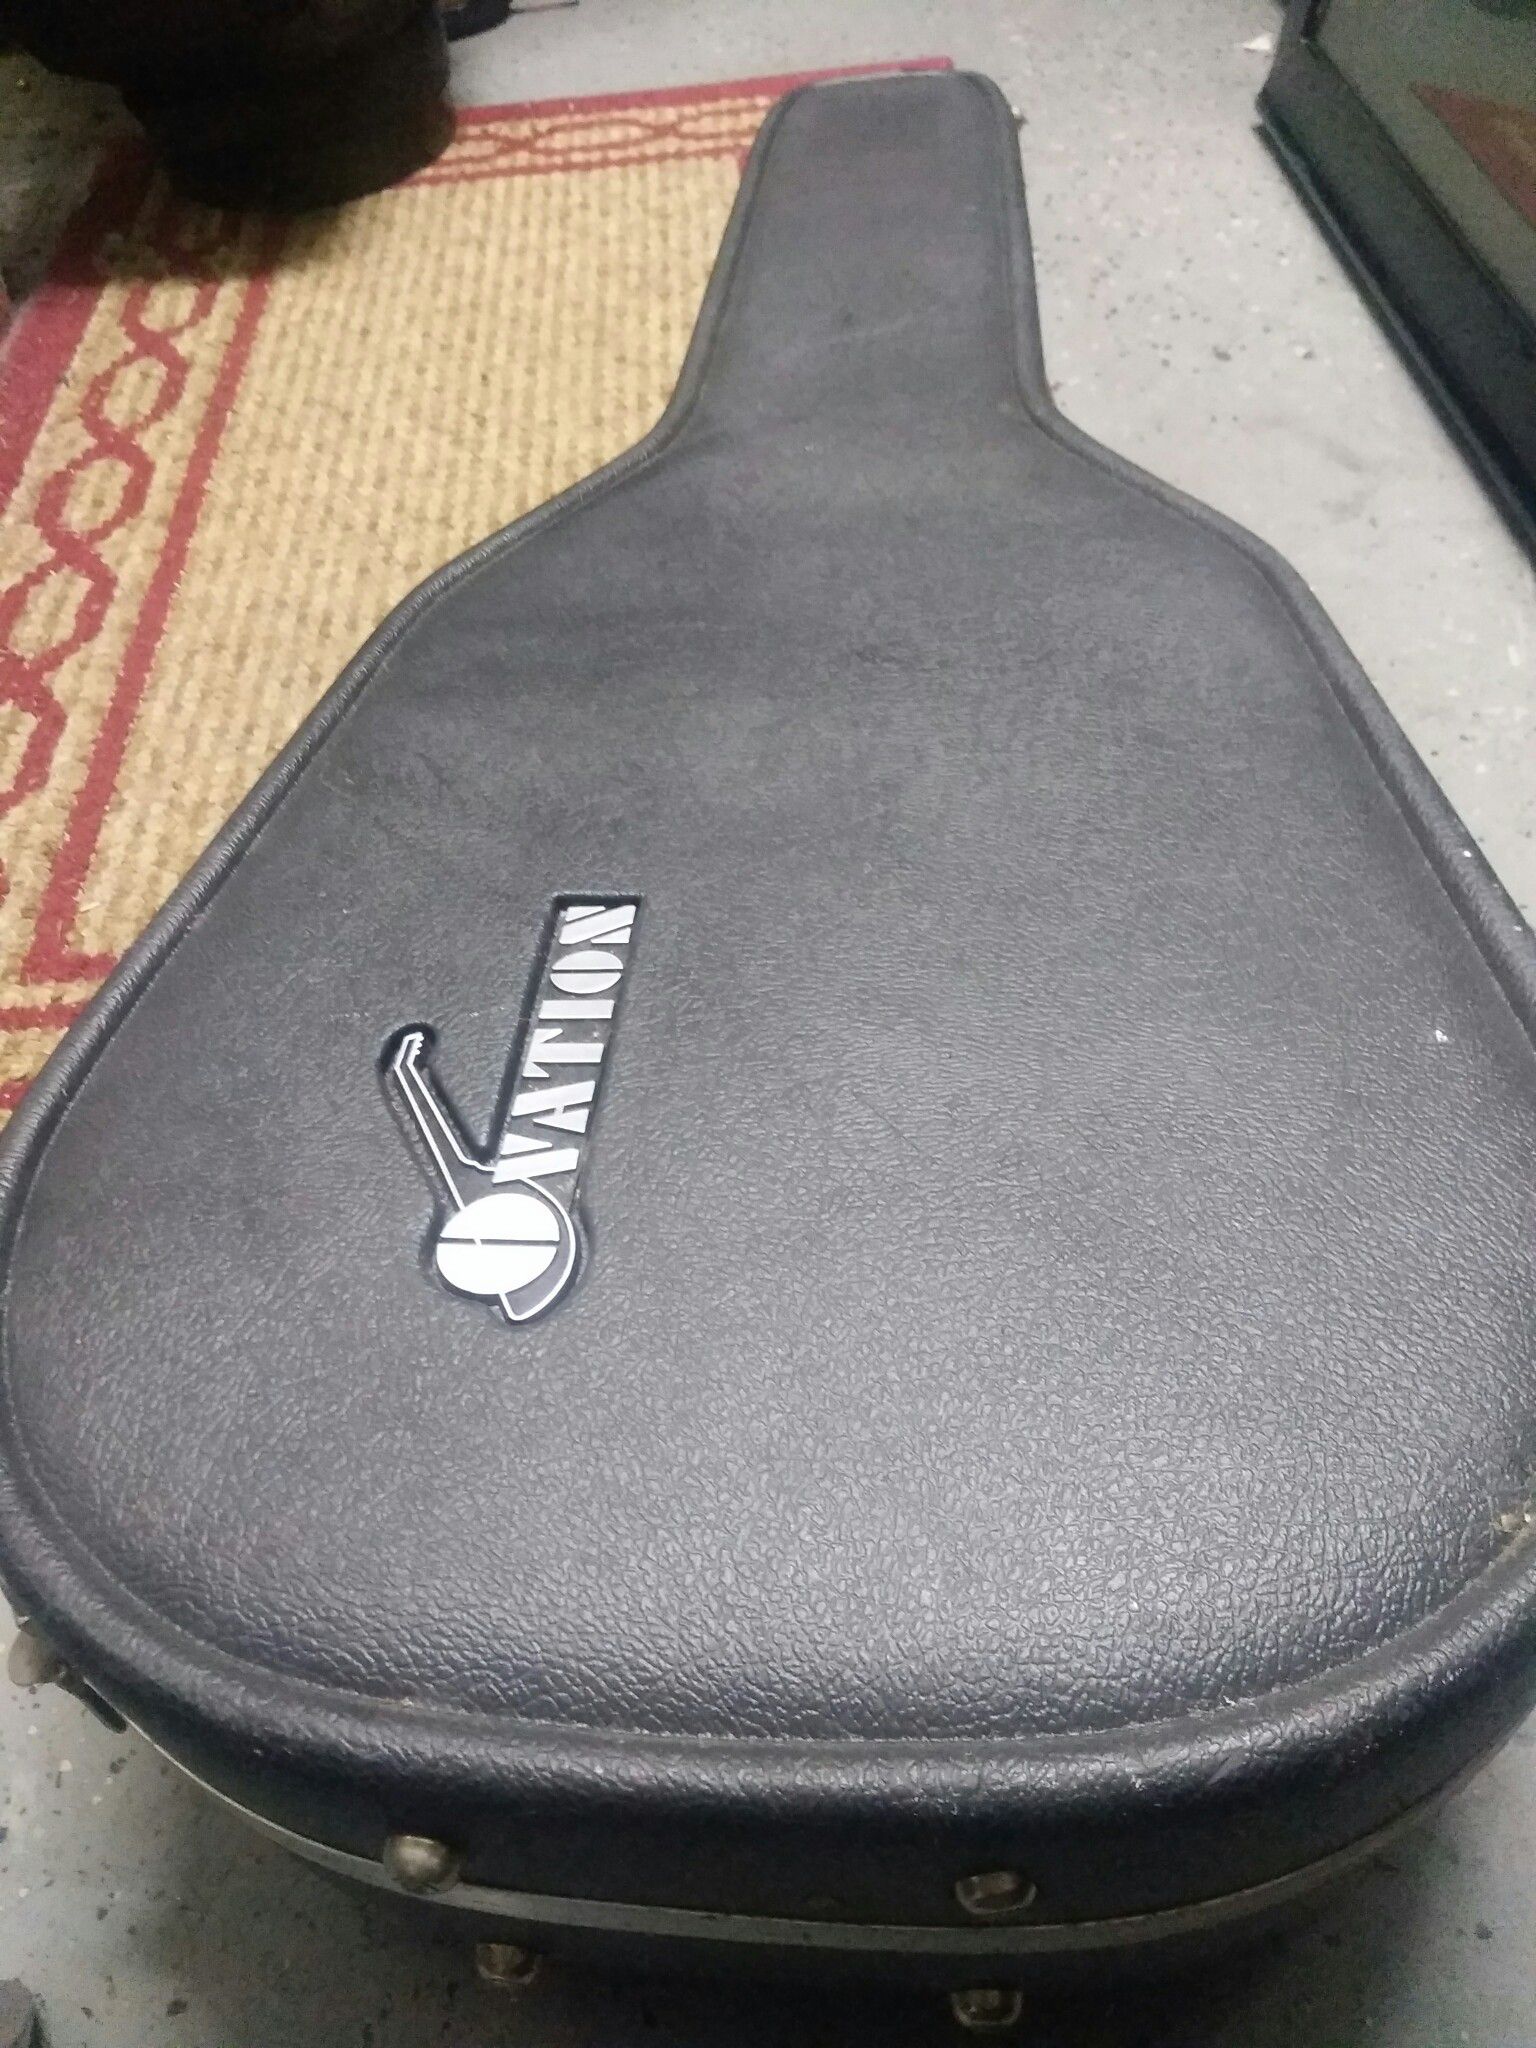 Ovation guitar case